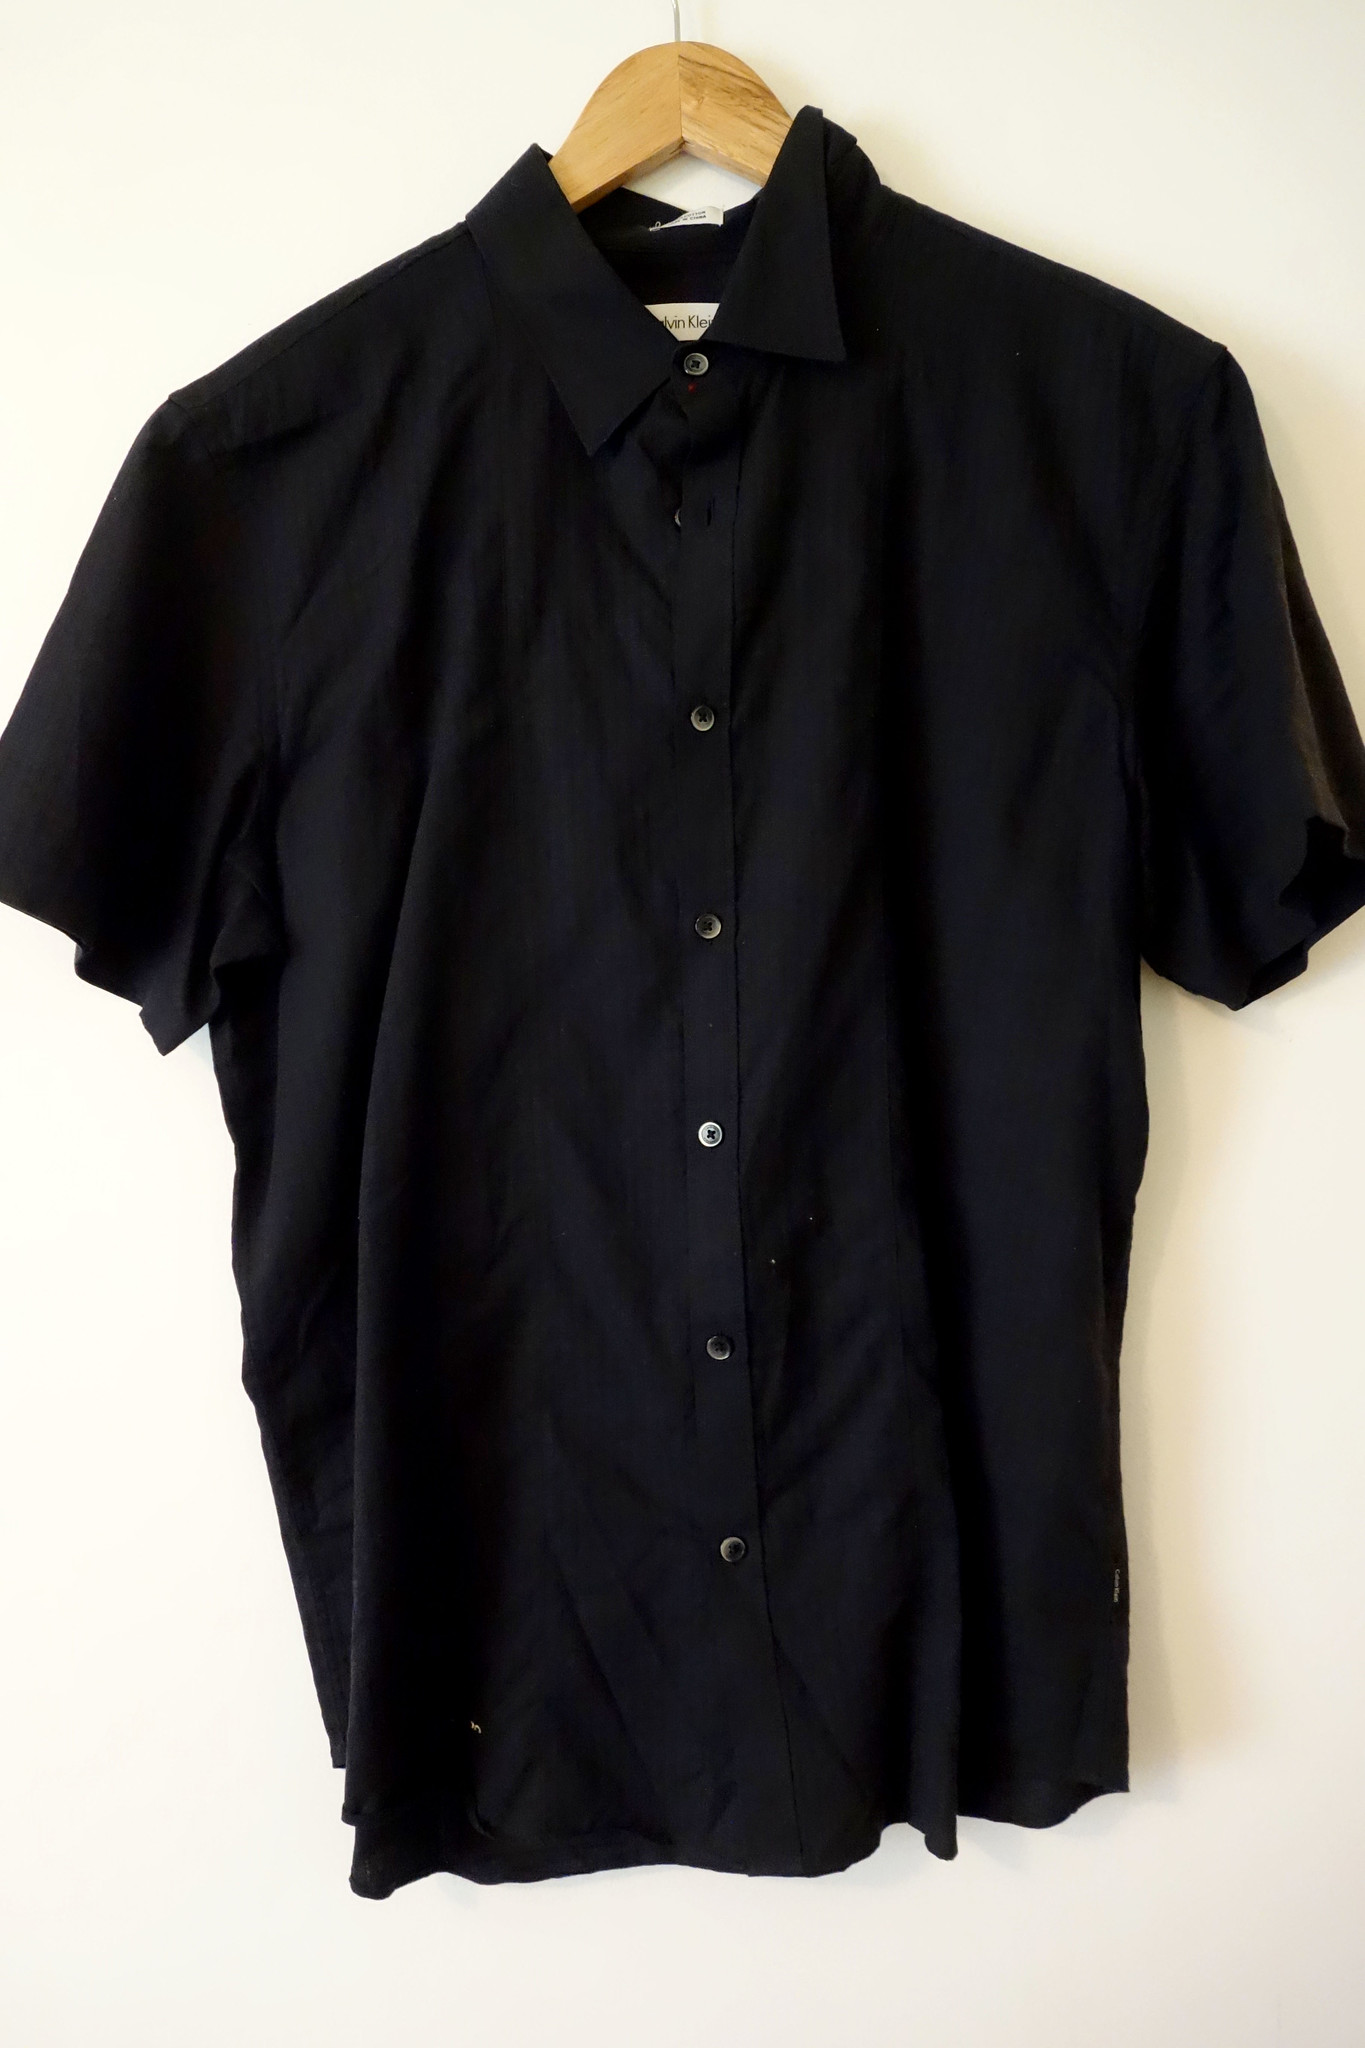 DSC03088 | Plain black short sleeve shirt | By: greggman | Flickr ...